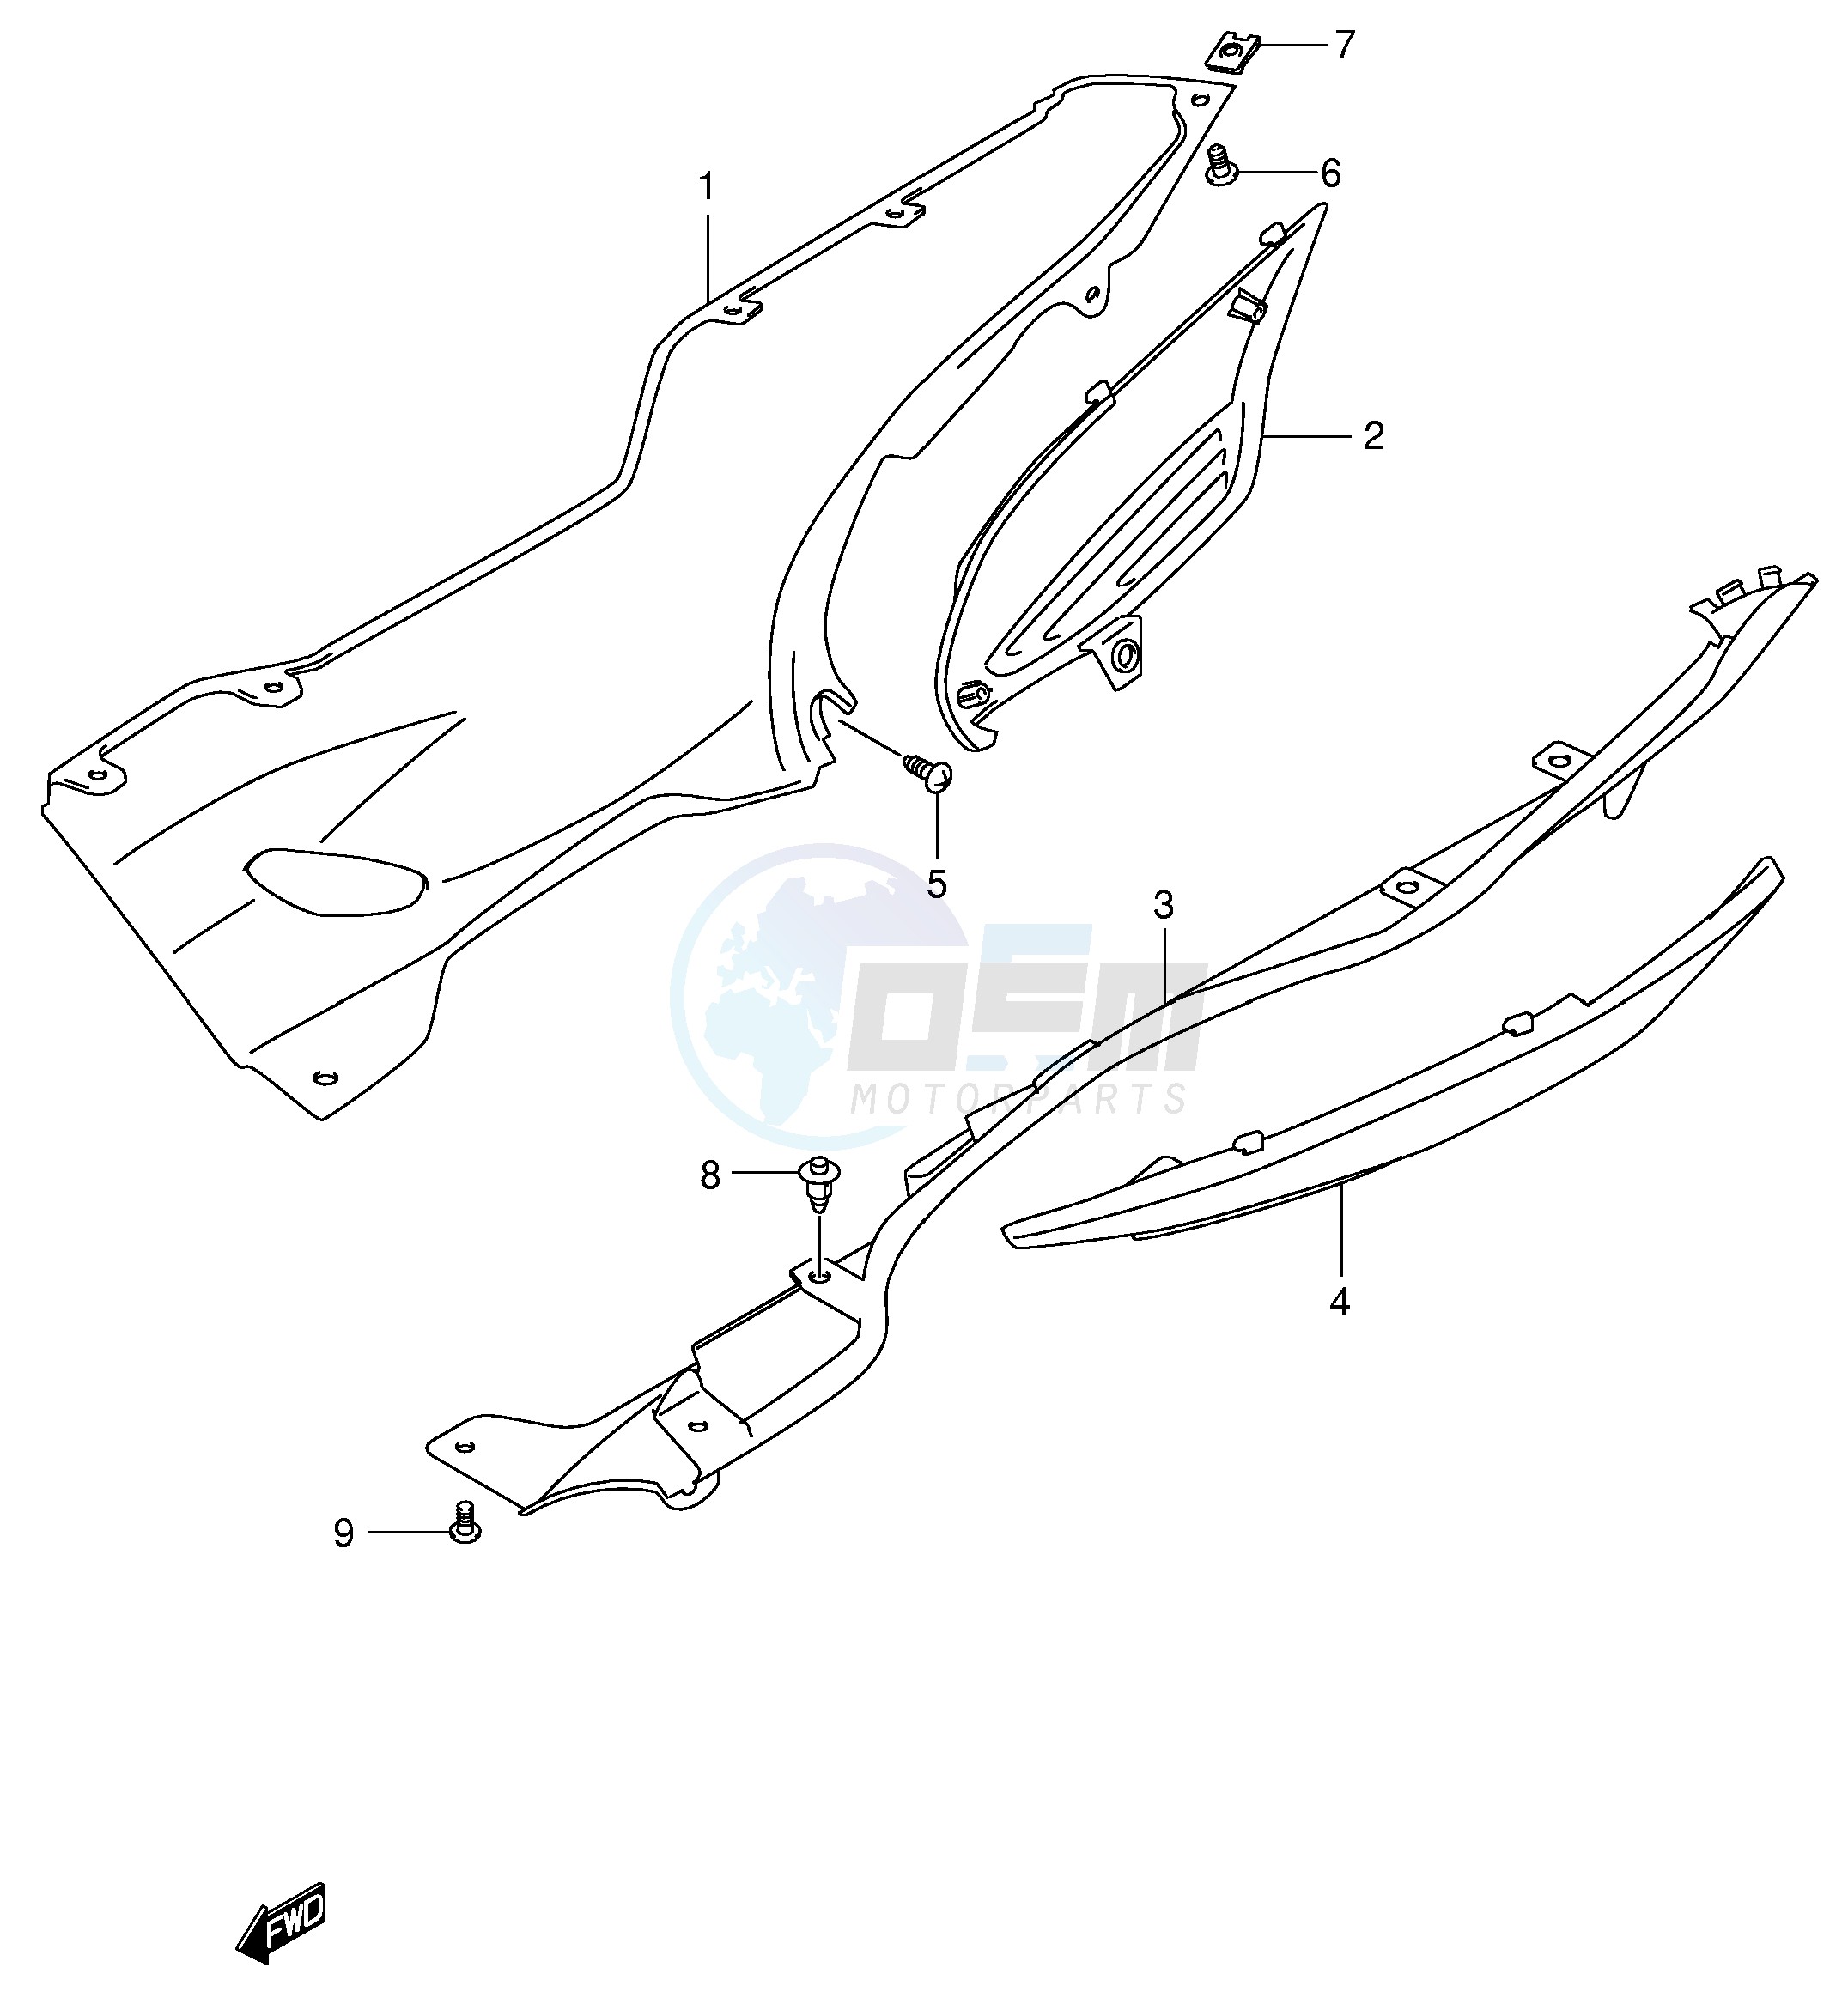 SIDE LEG SHIELD (MODEL X) blueprint